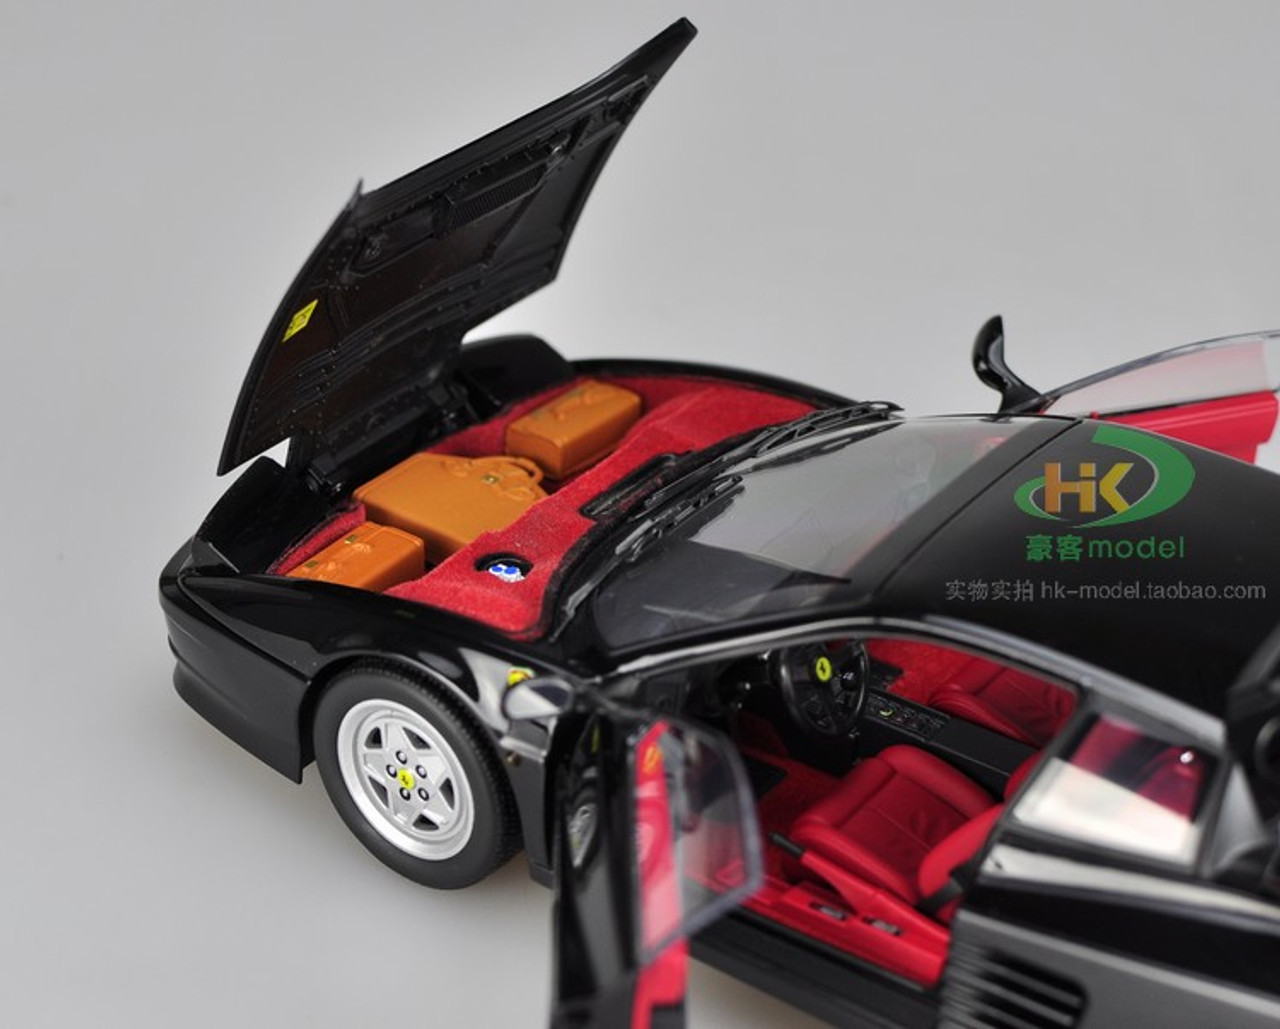 1/18 Kyosho 1989 1990 Ferrari Testarossa (Black) Diecast Car Model